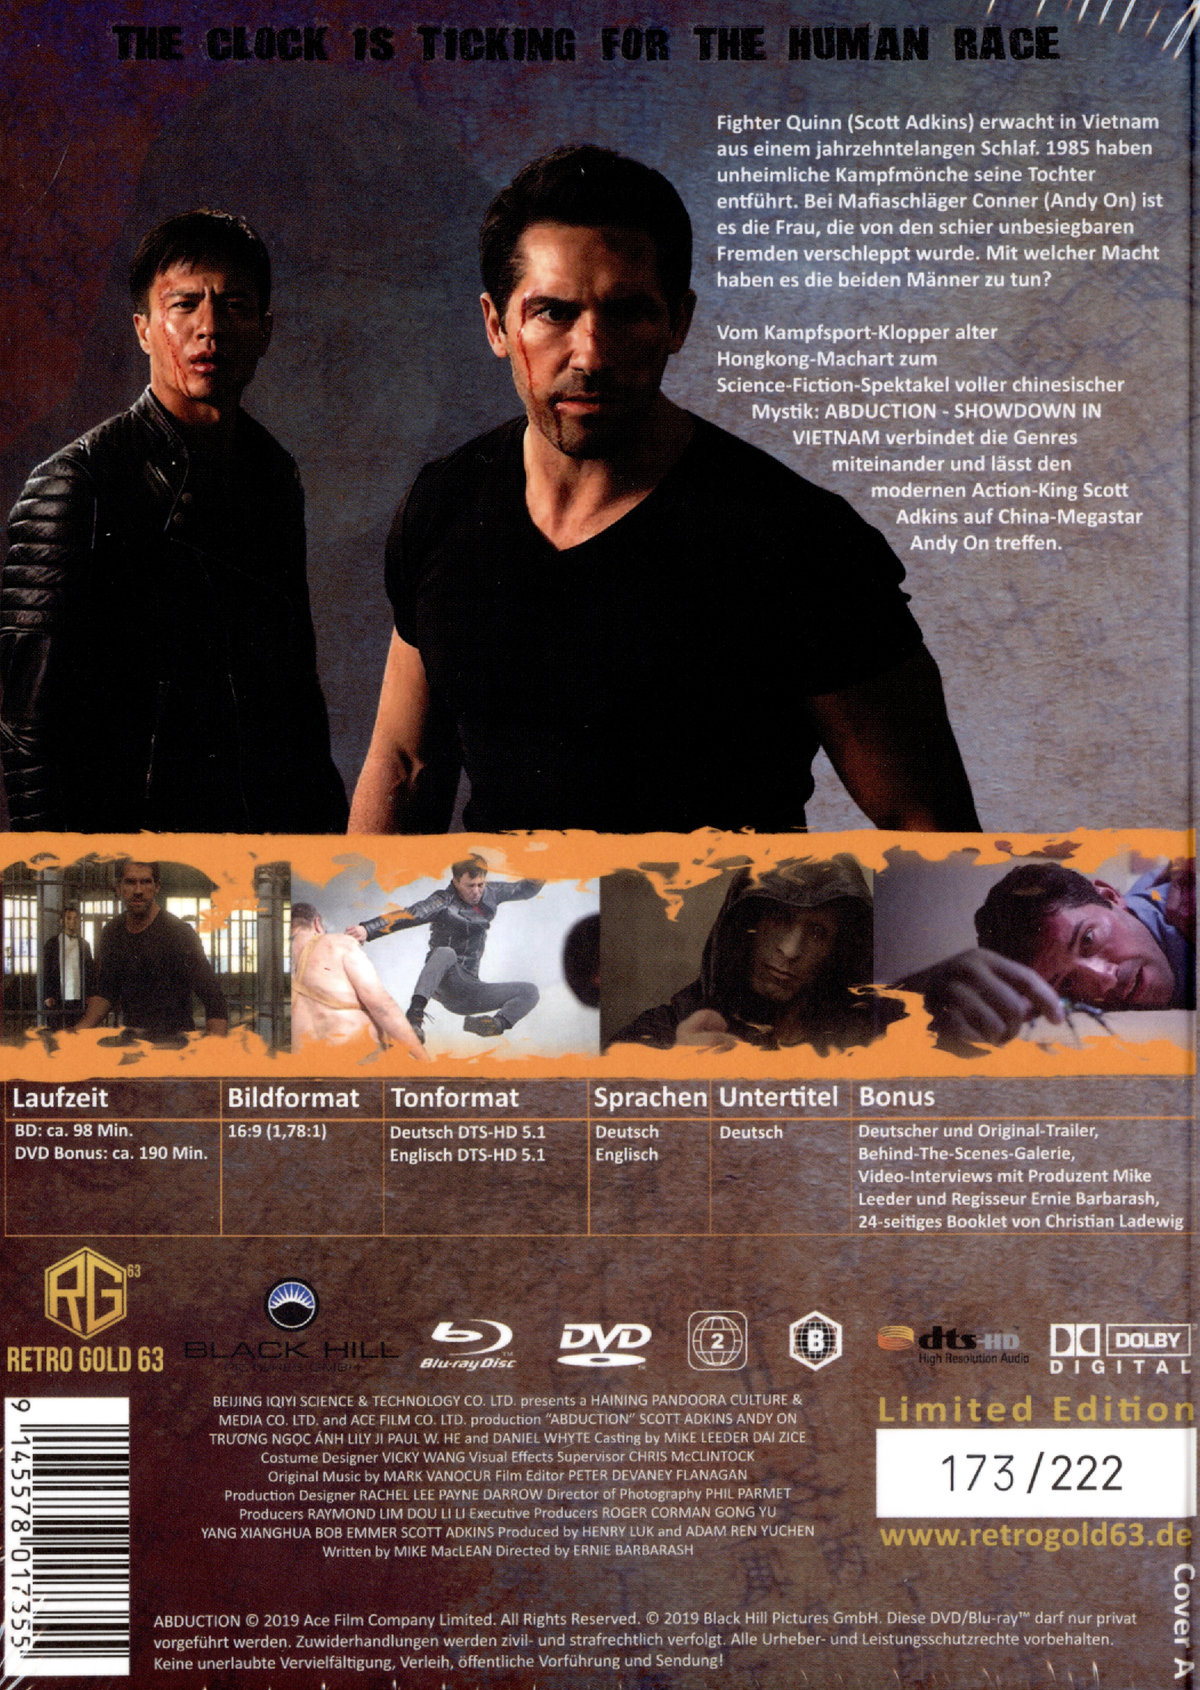 Abduction - Showdown in Vietnam - Uncut Mediabook Edition (DVD+blu-ray)